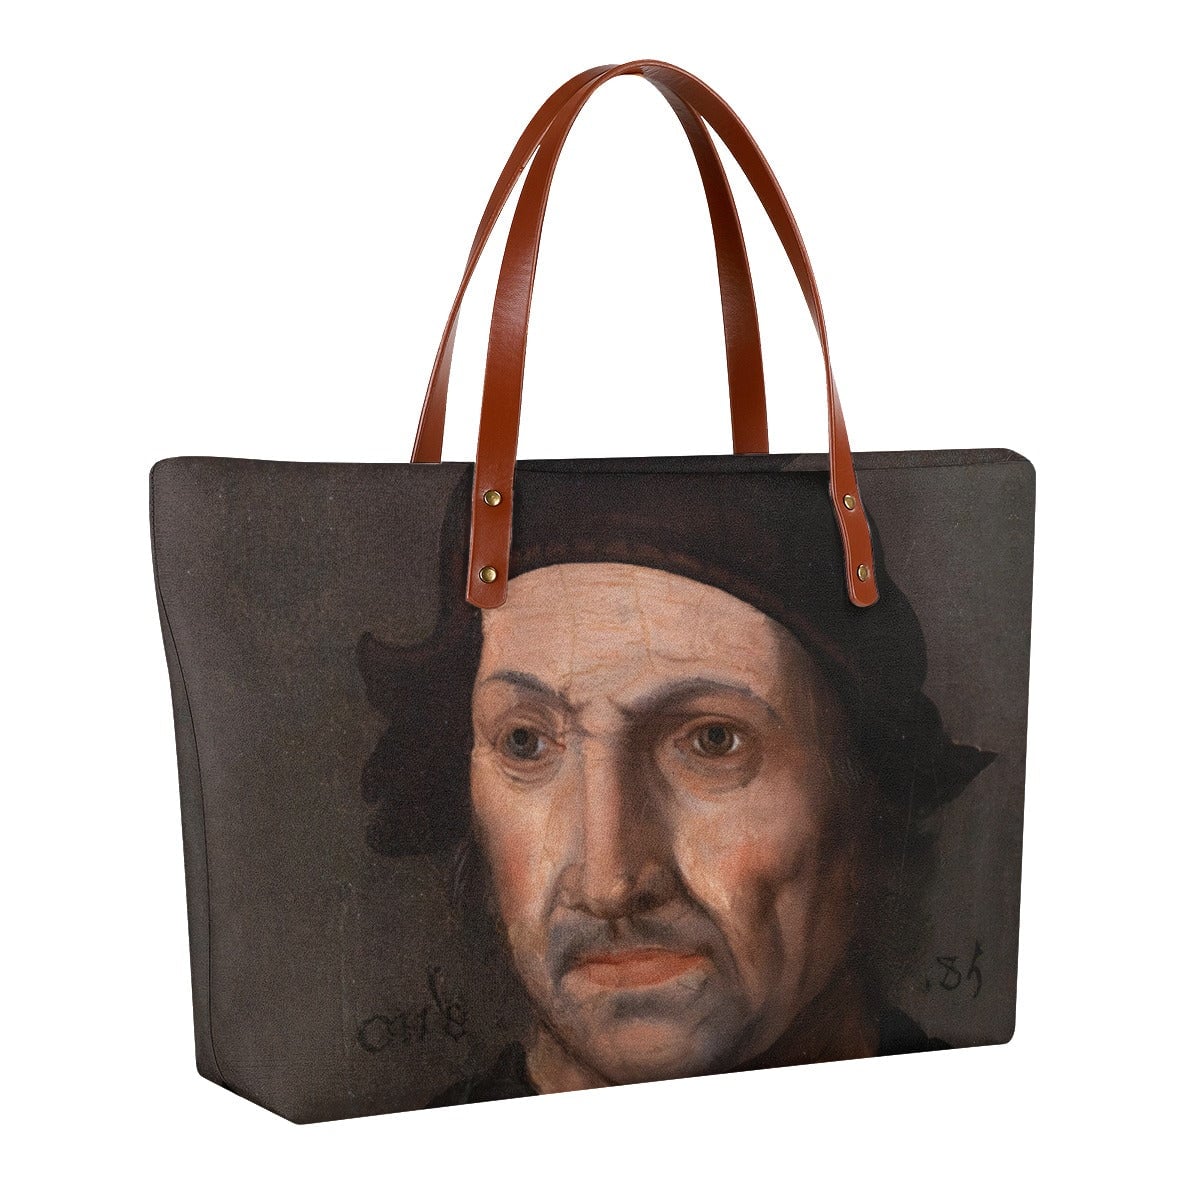 Hieronymus Bosch Portrait Tote Bag